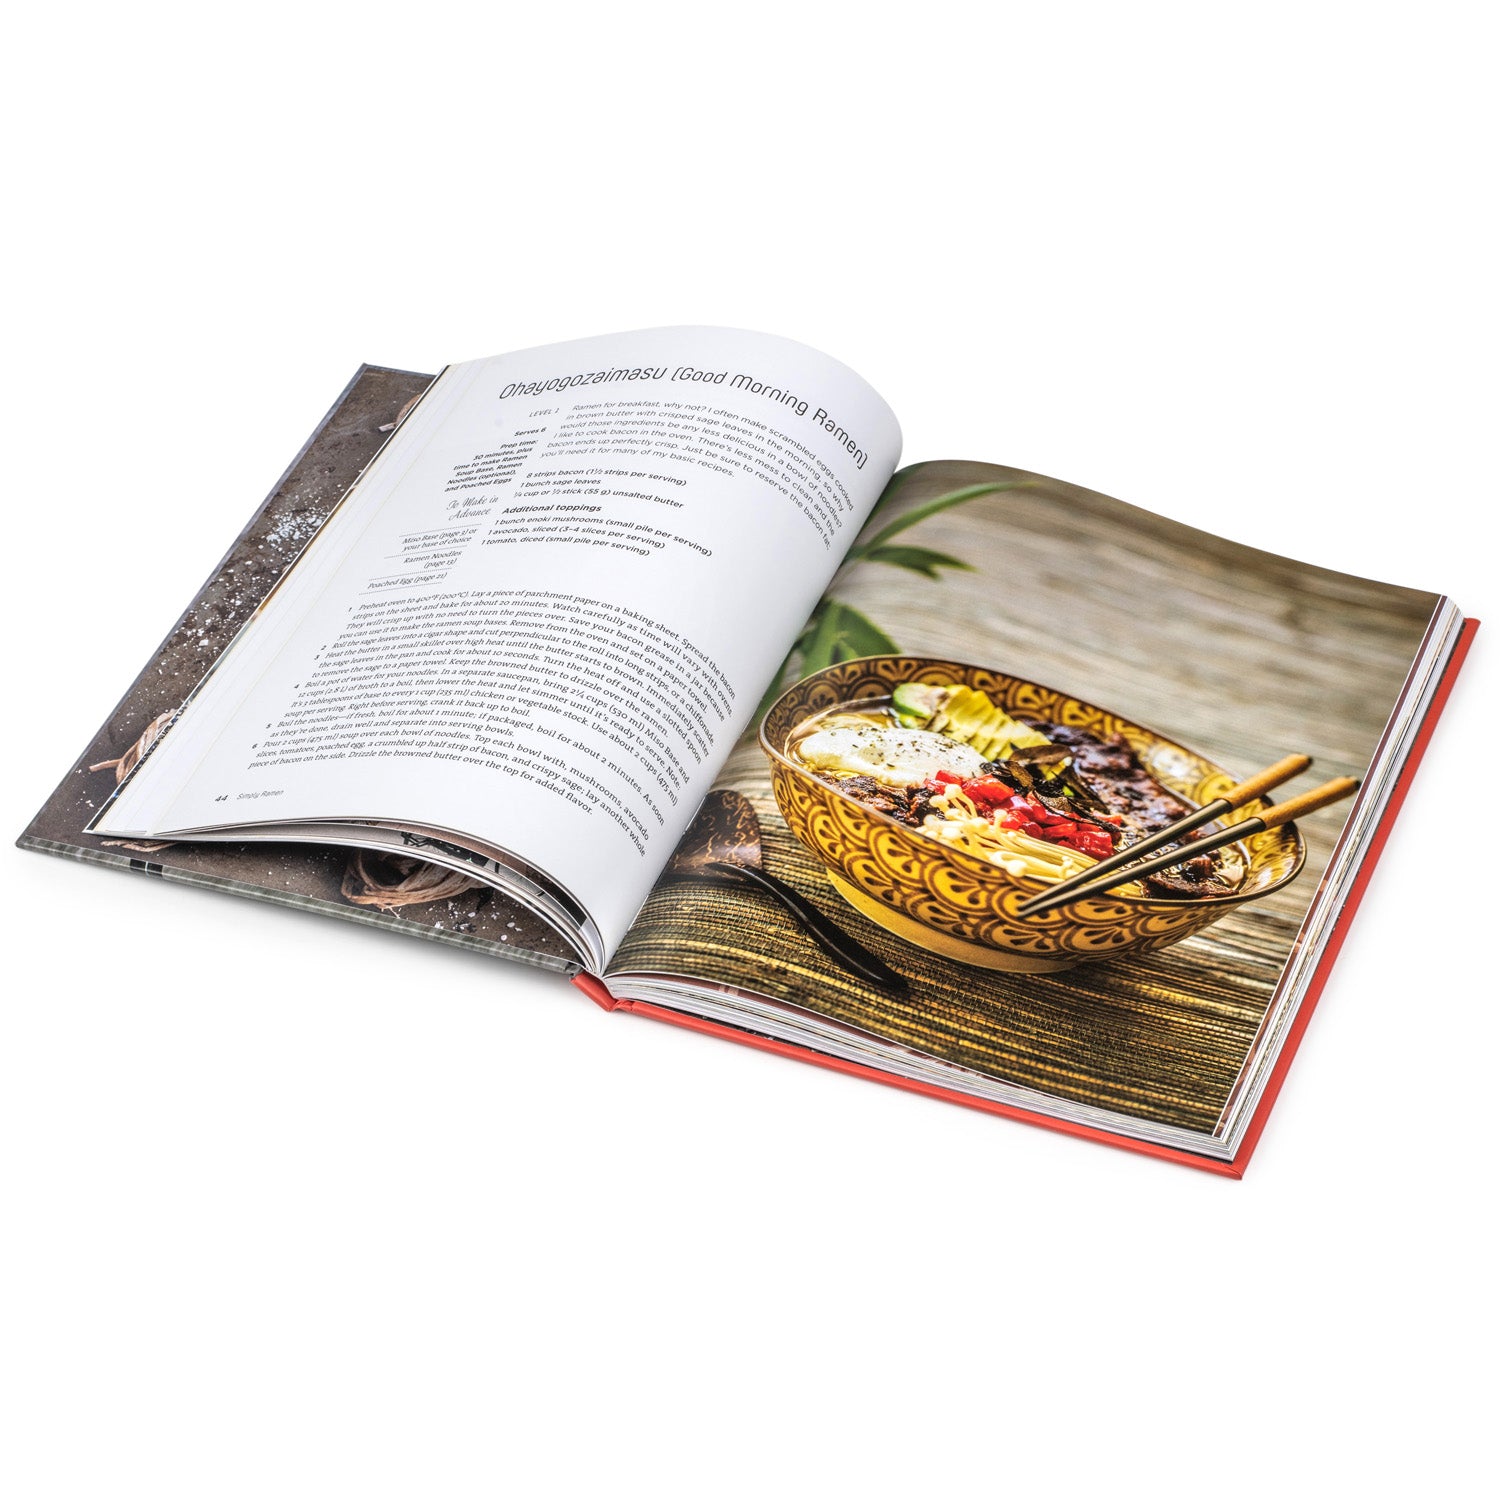 Simply Ramen Japanese Cookbook